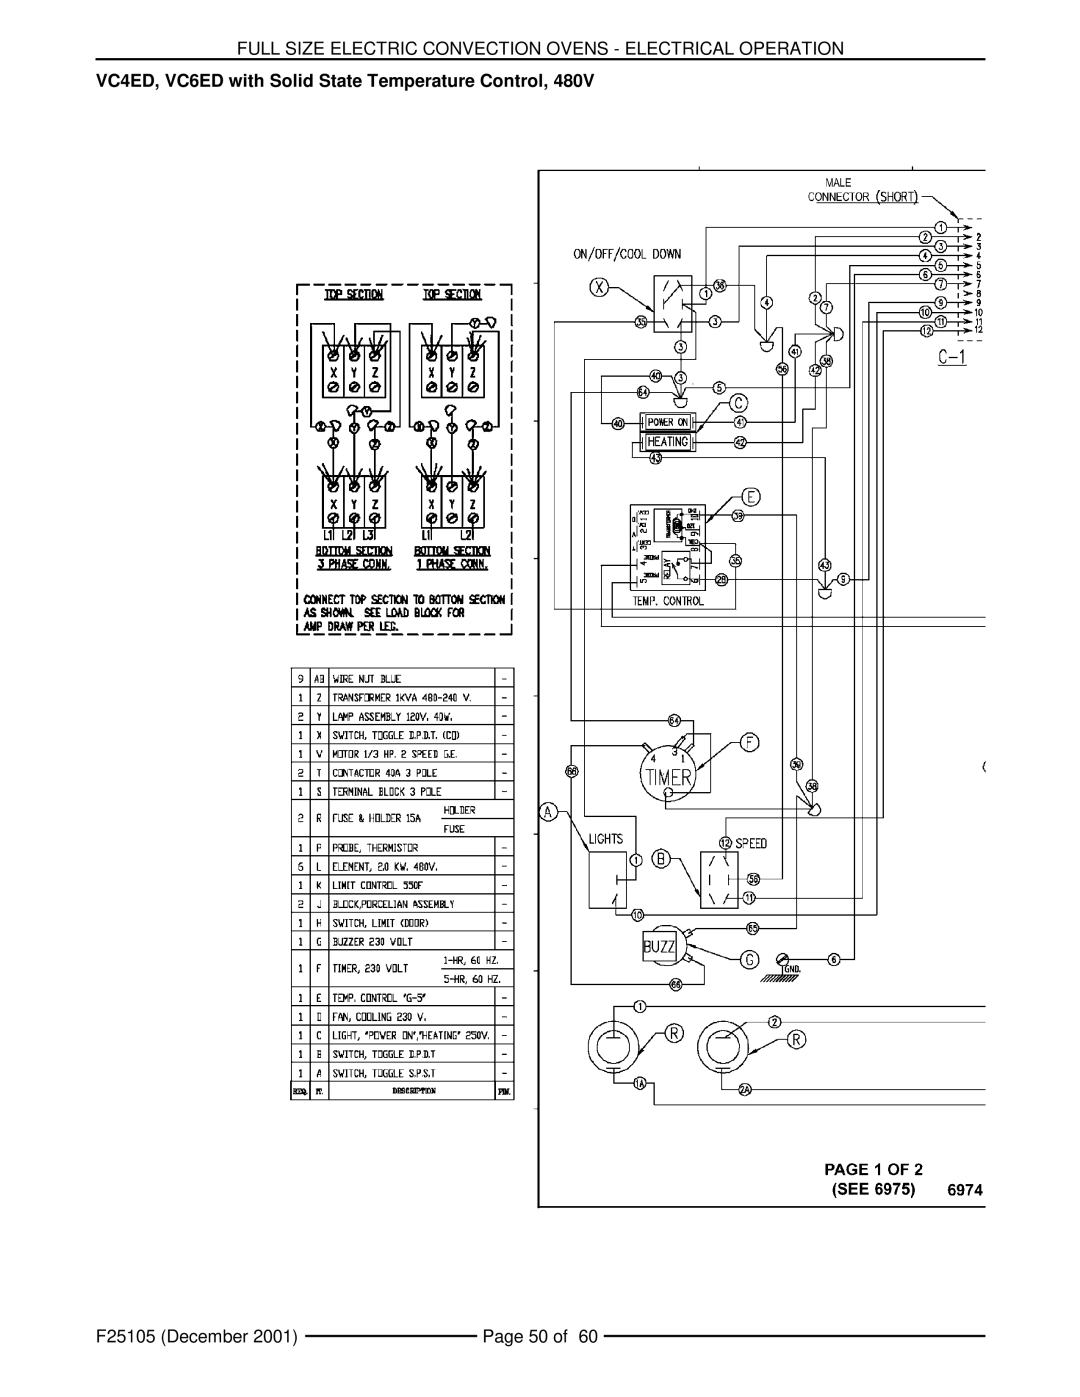 Vulcan-Hart VC6EC, VCIEC, VC6ED, VC4ES, VC4ED, VC6ES service manual F25105 December, Page 50 of 